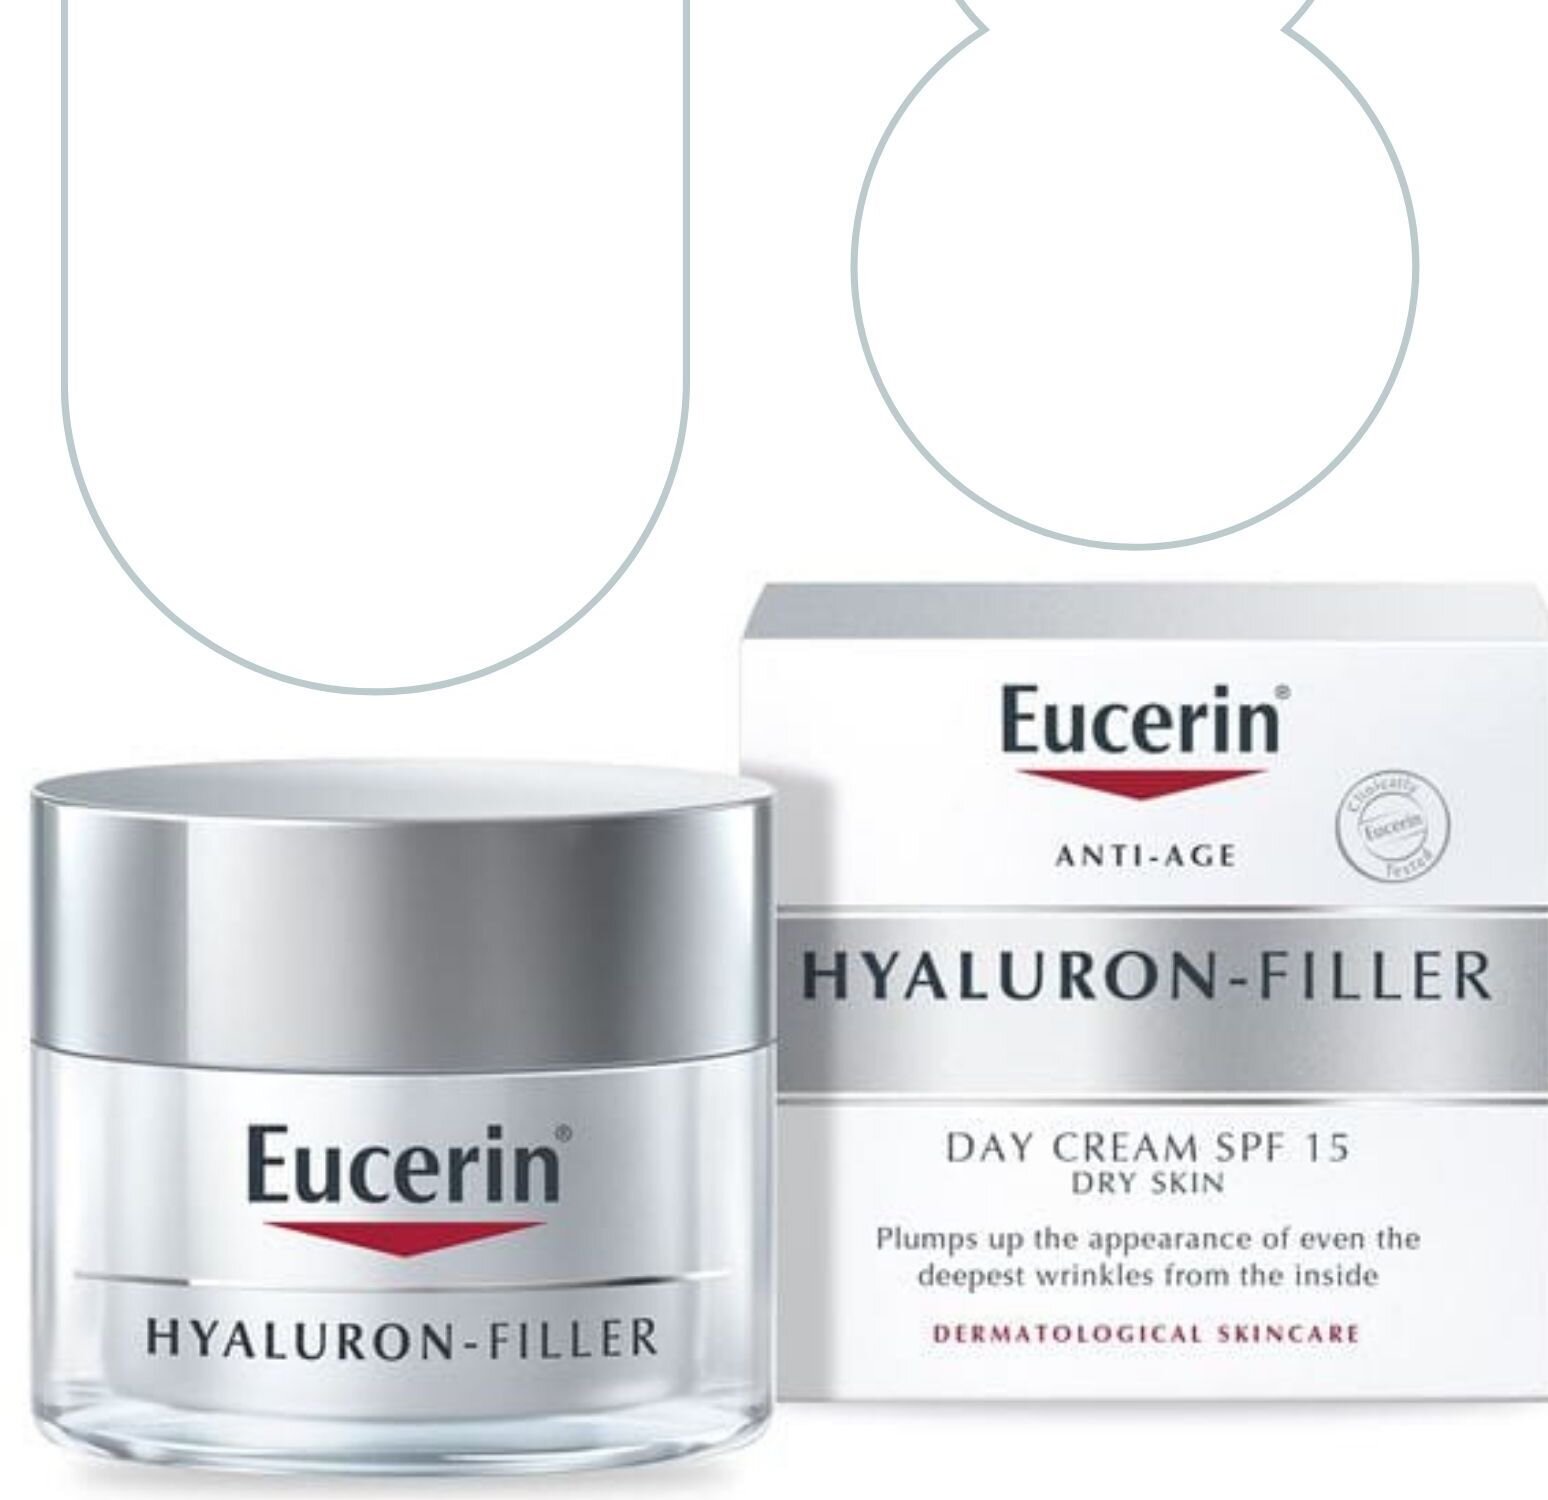 Eucerin hyaluron filler crema pentru ochi suplimentara efect intens anti rid 15 ml | dancewithmestudio.ro